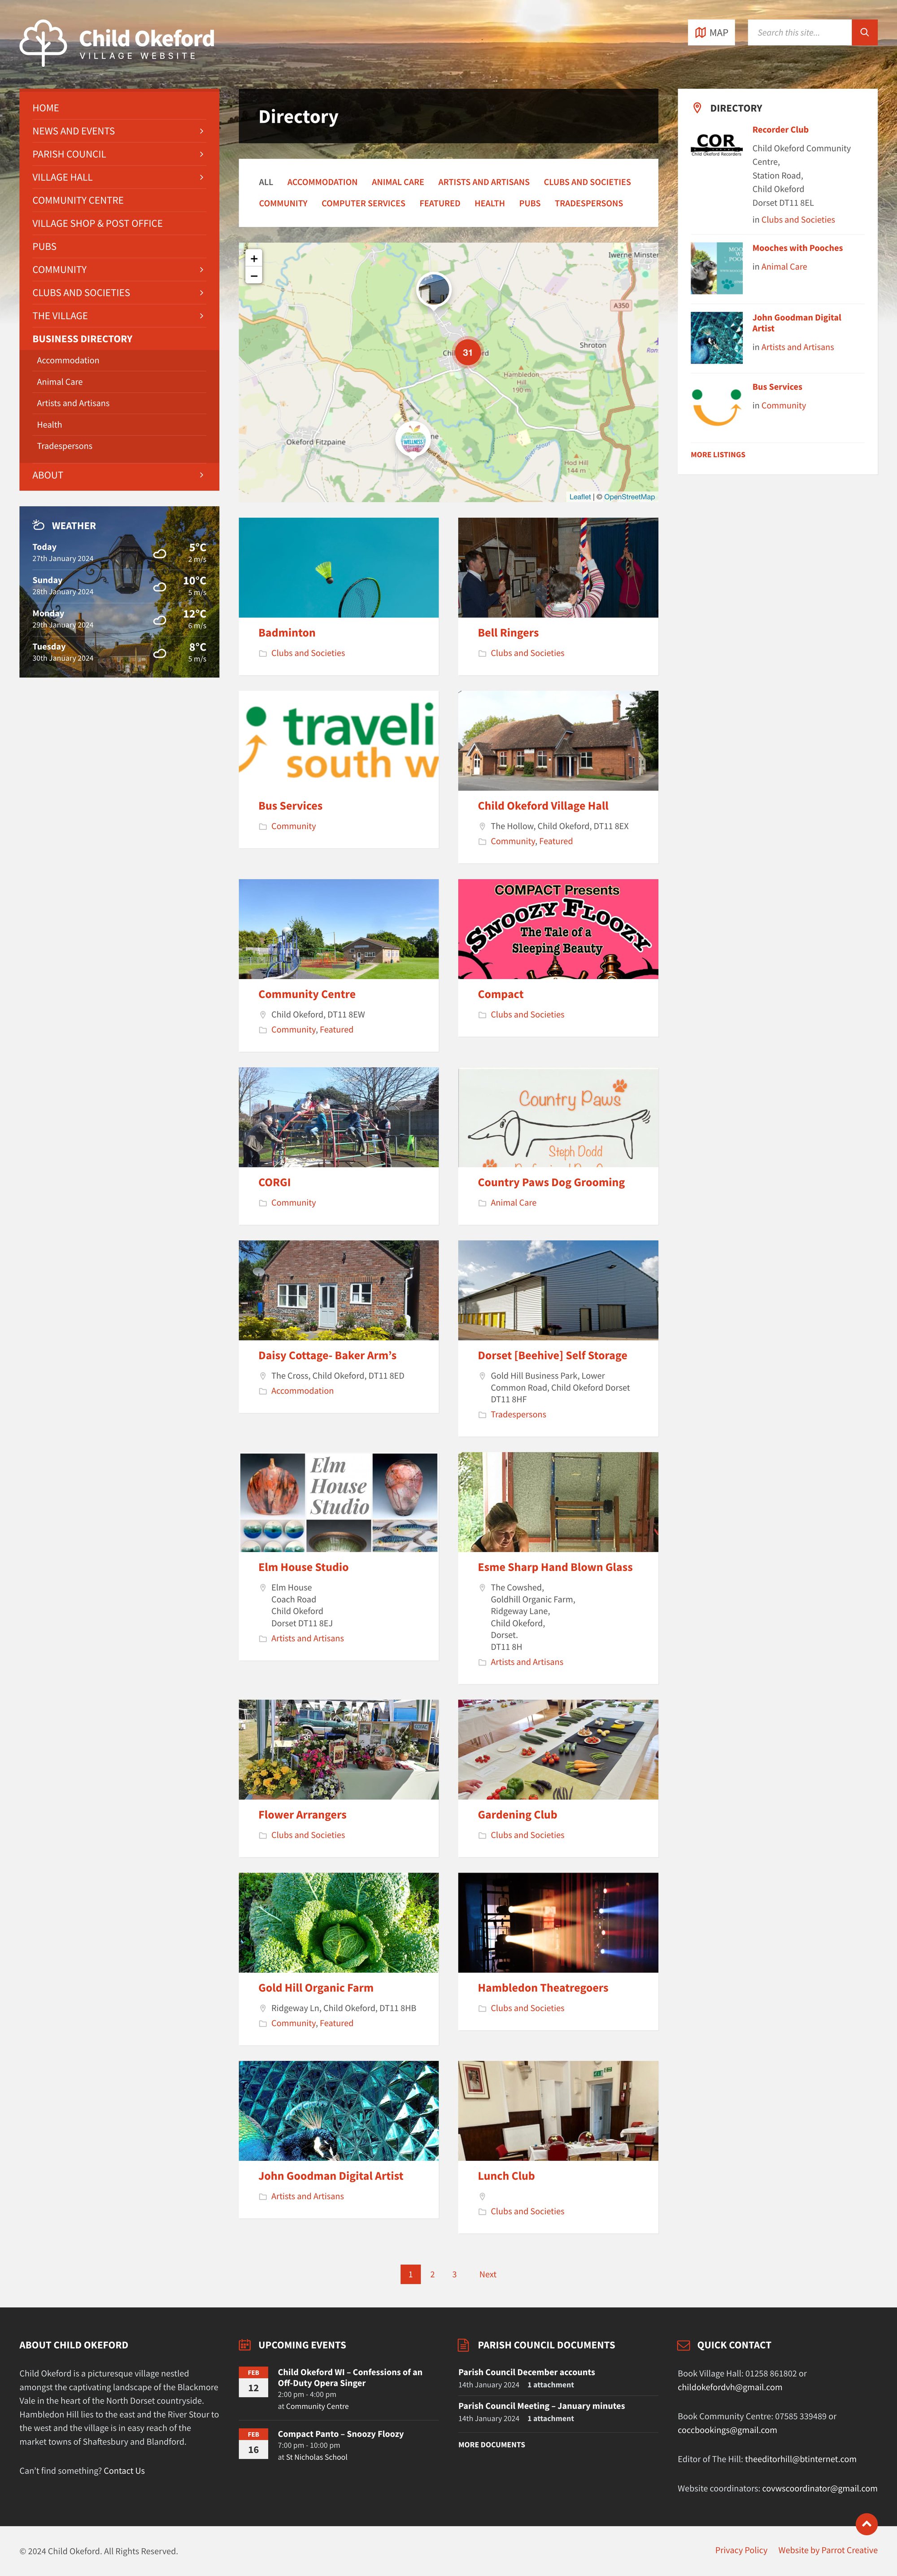 Village and Parish Council website design business directory